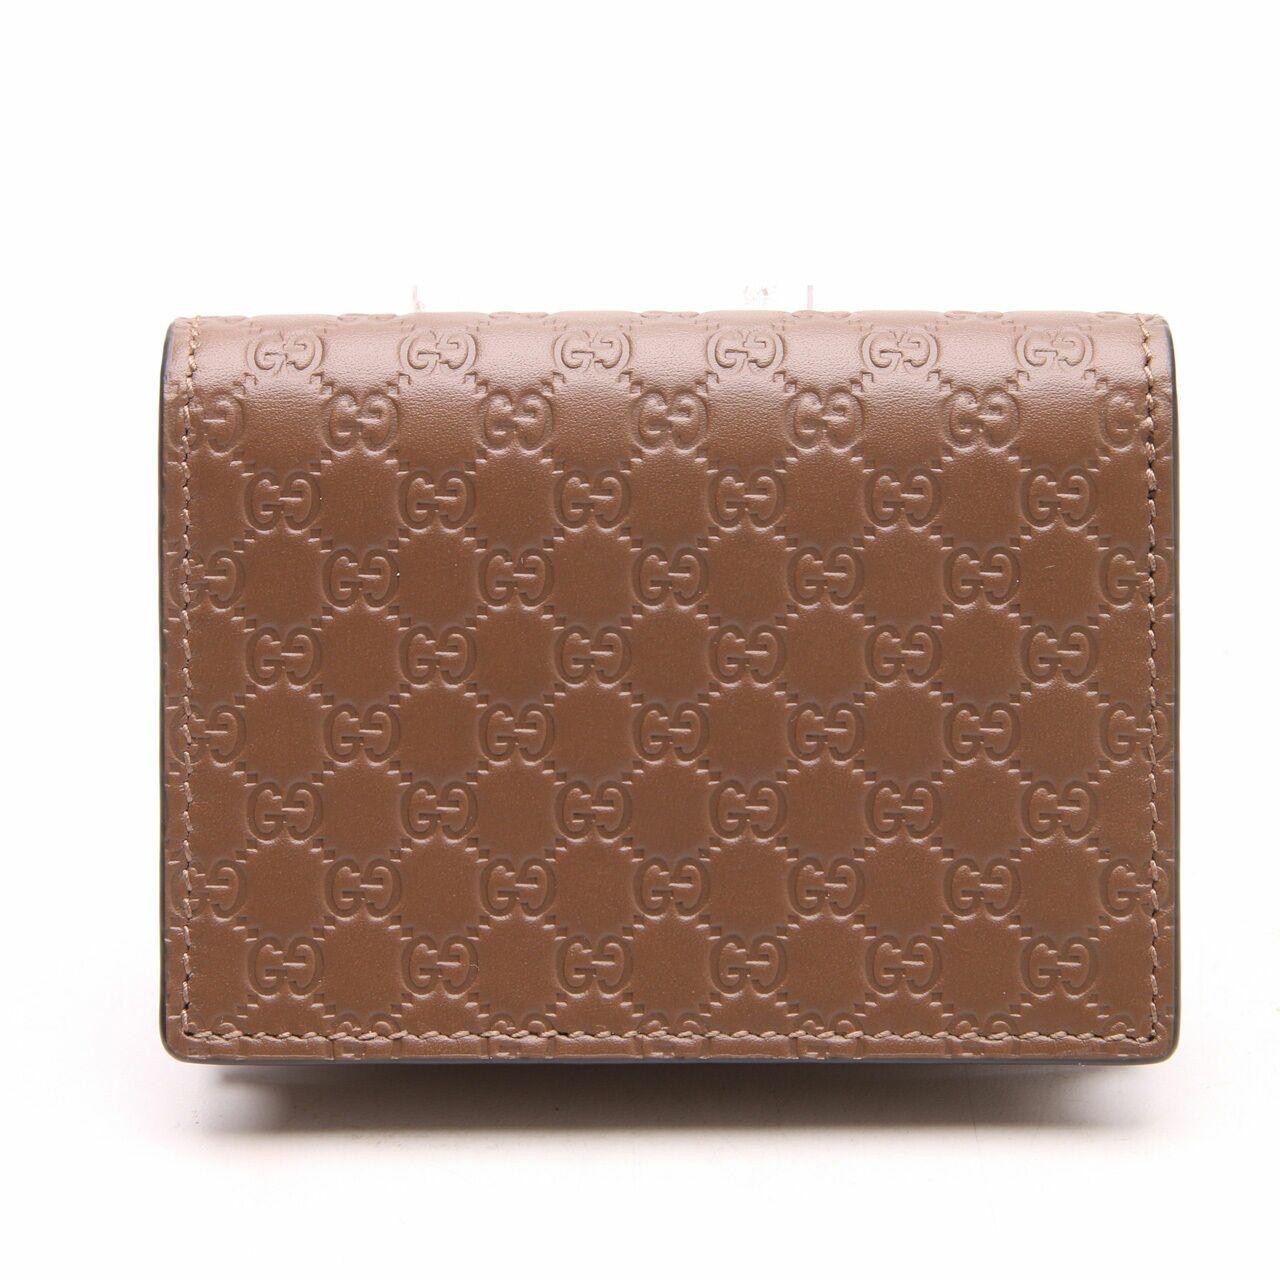 Gucci Microguccisima Brown Card Case Wallet